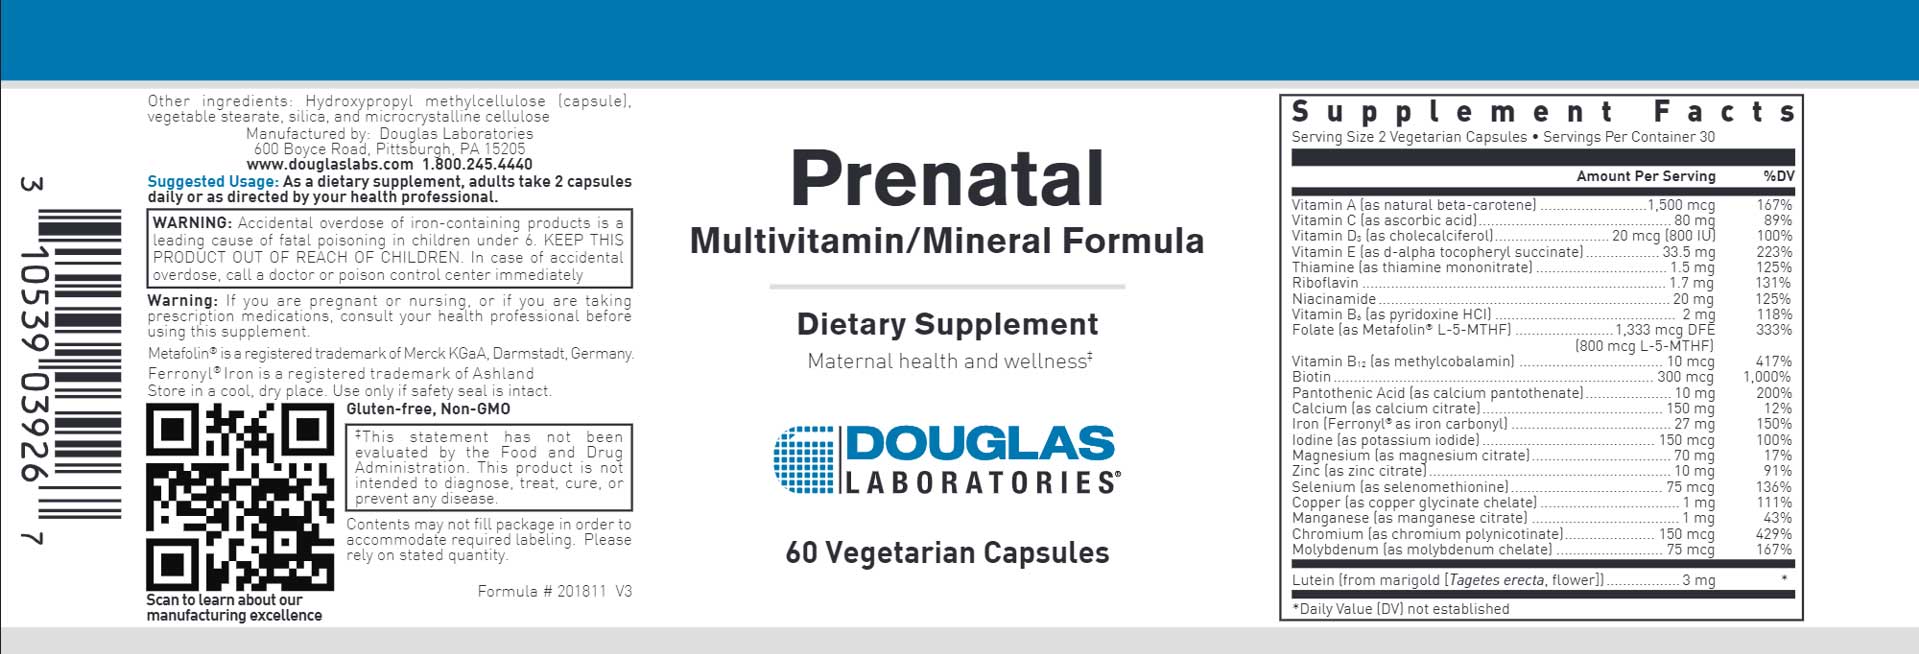 Douglas Laboratories Prenatal Label